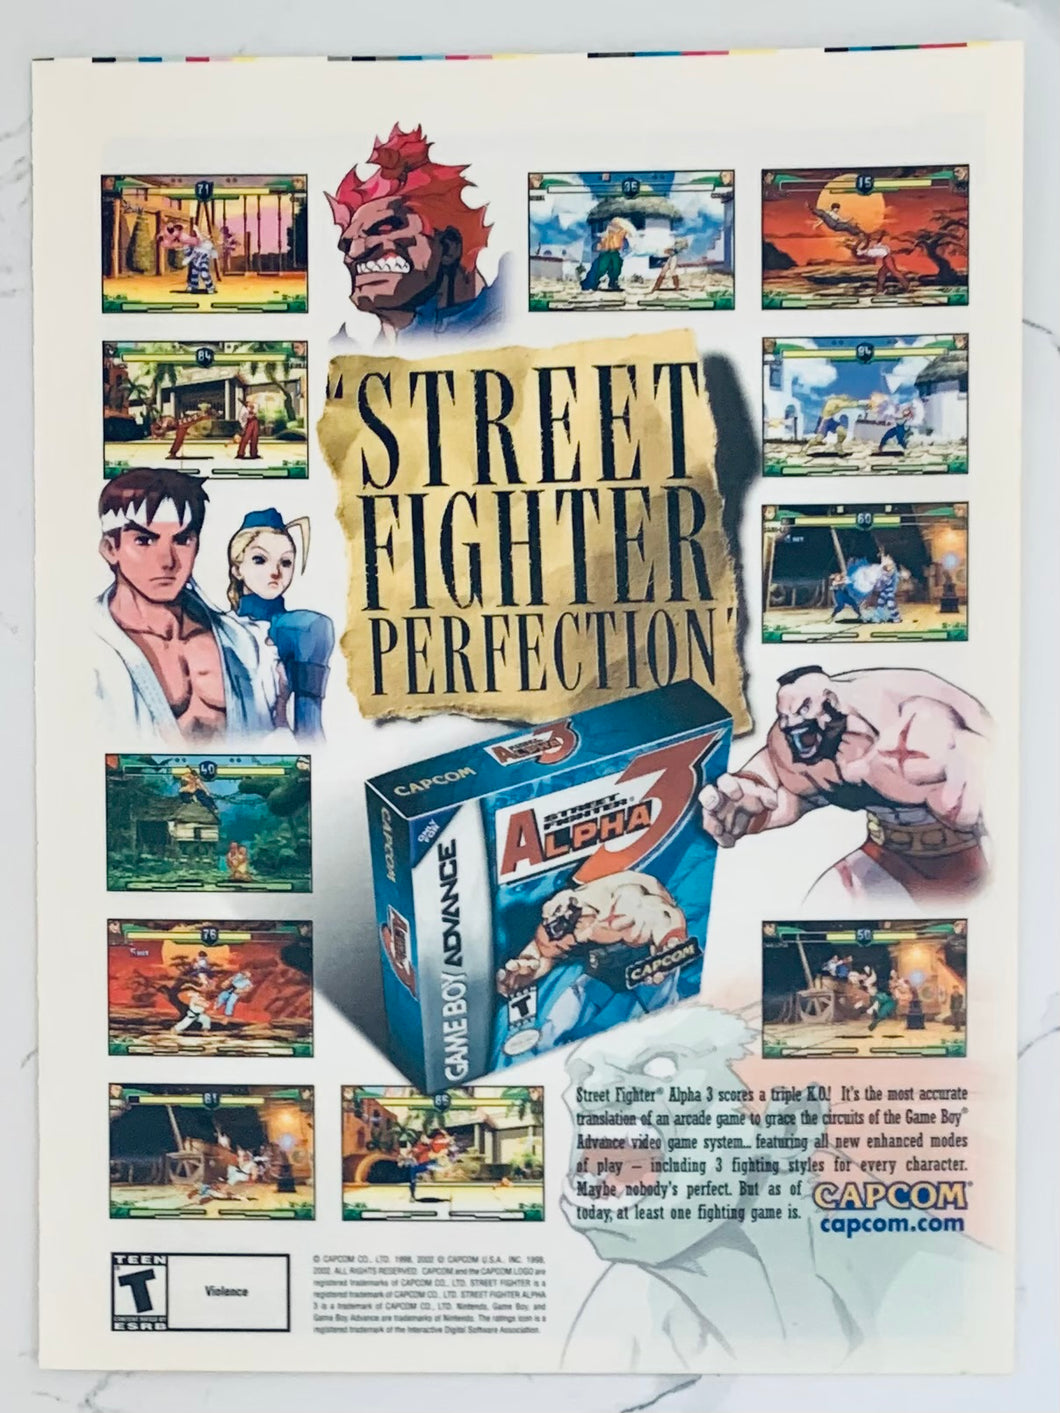 Street Fighter Alpha 3 - GameBoy Advance - Original Vintage Advertisement - Print Ads - Laminated A4 Poster